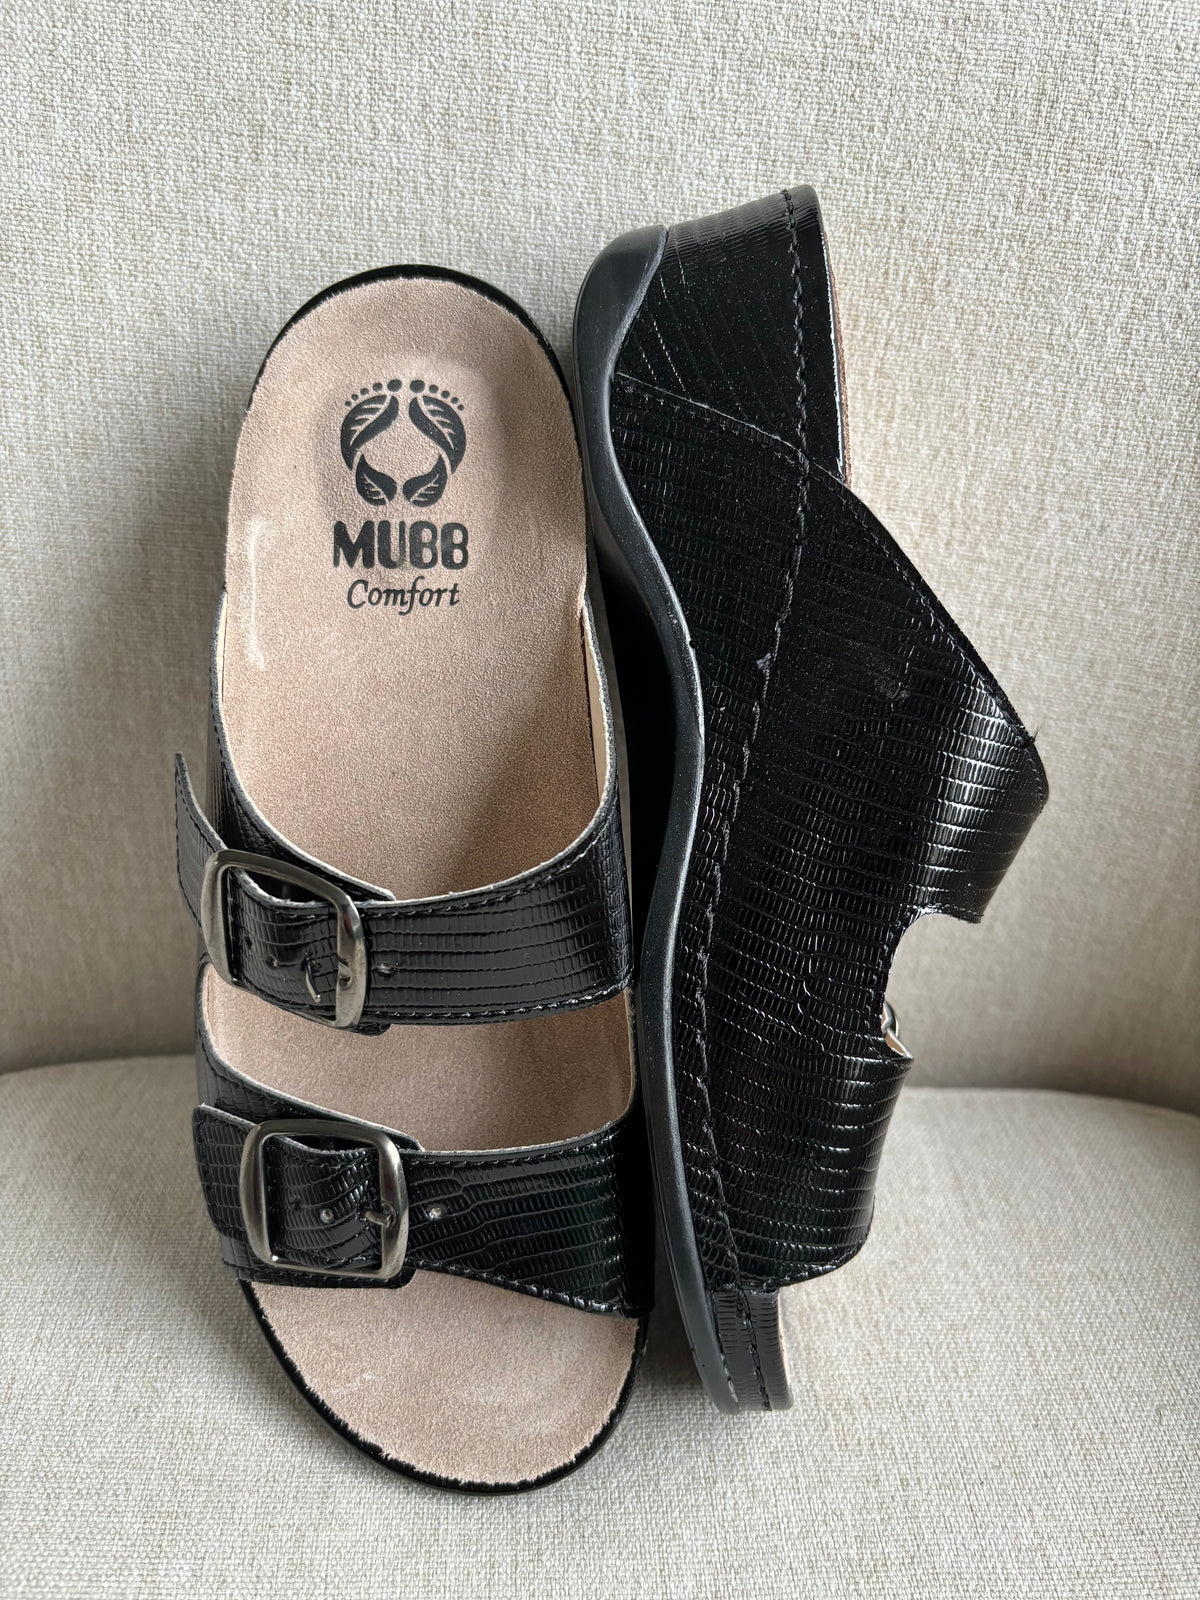 Comfort memory foam sandals by MUBB comfort - black